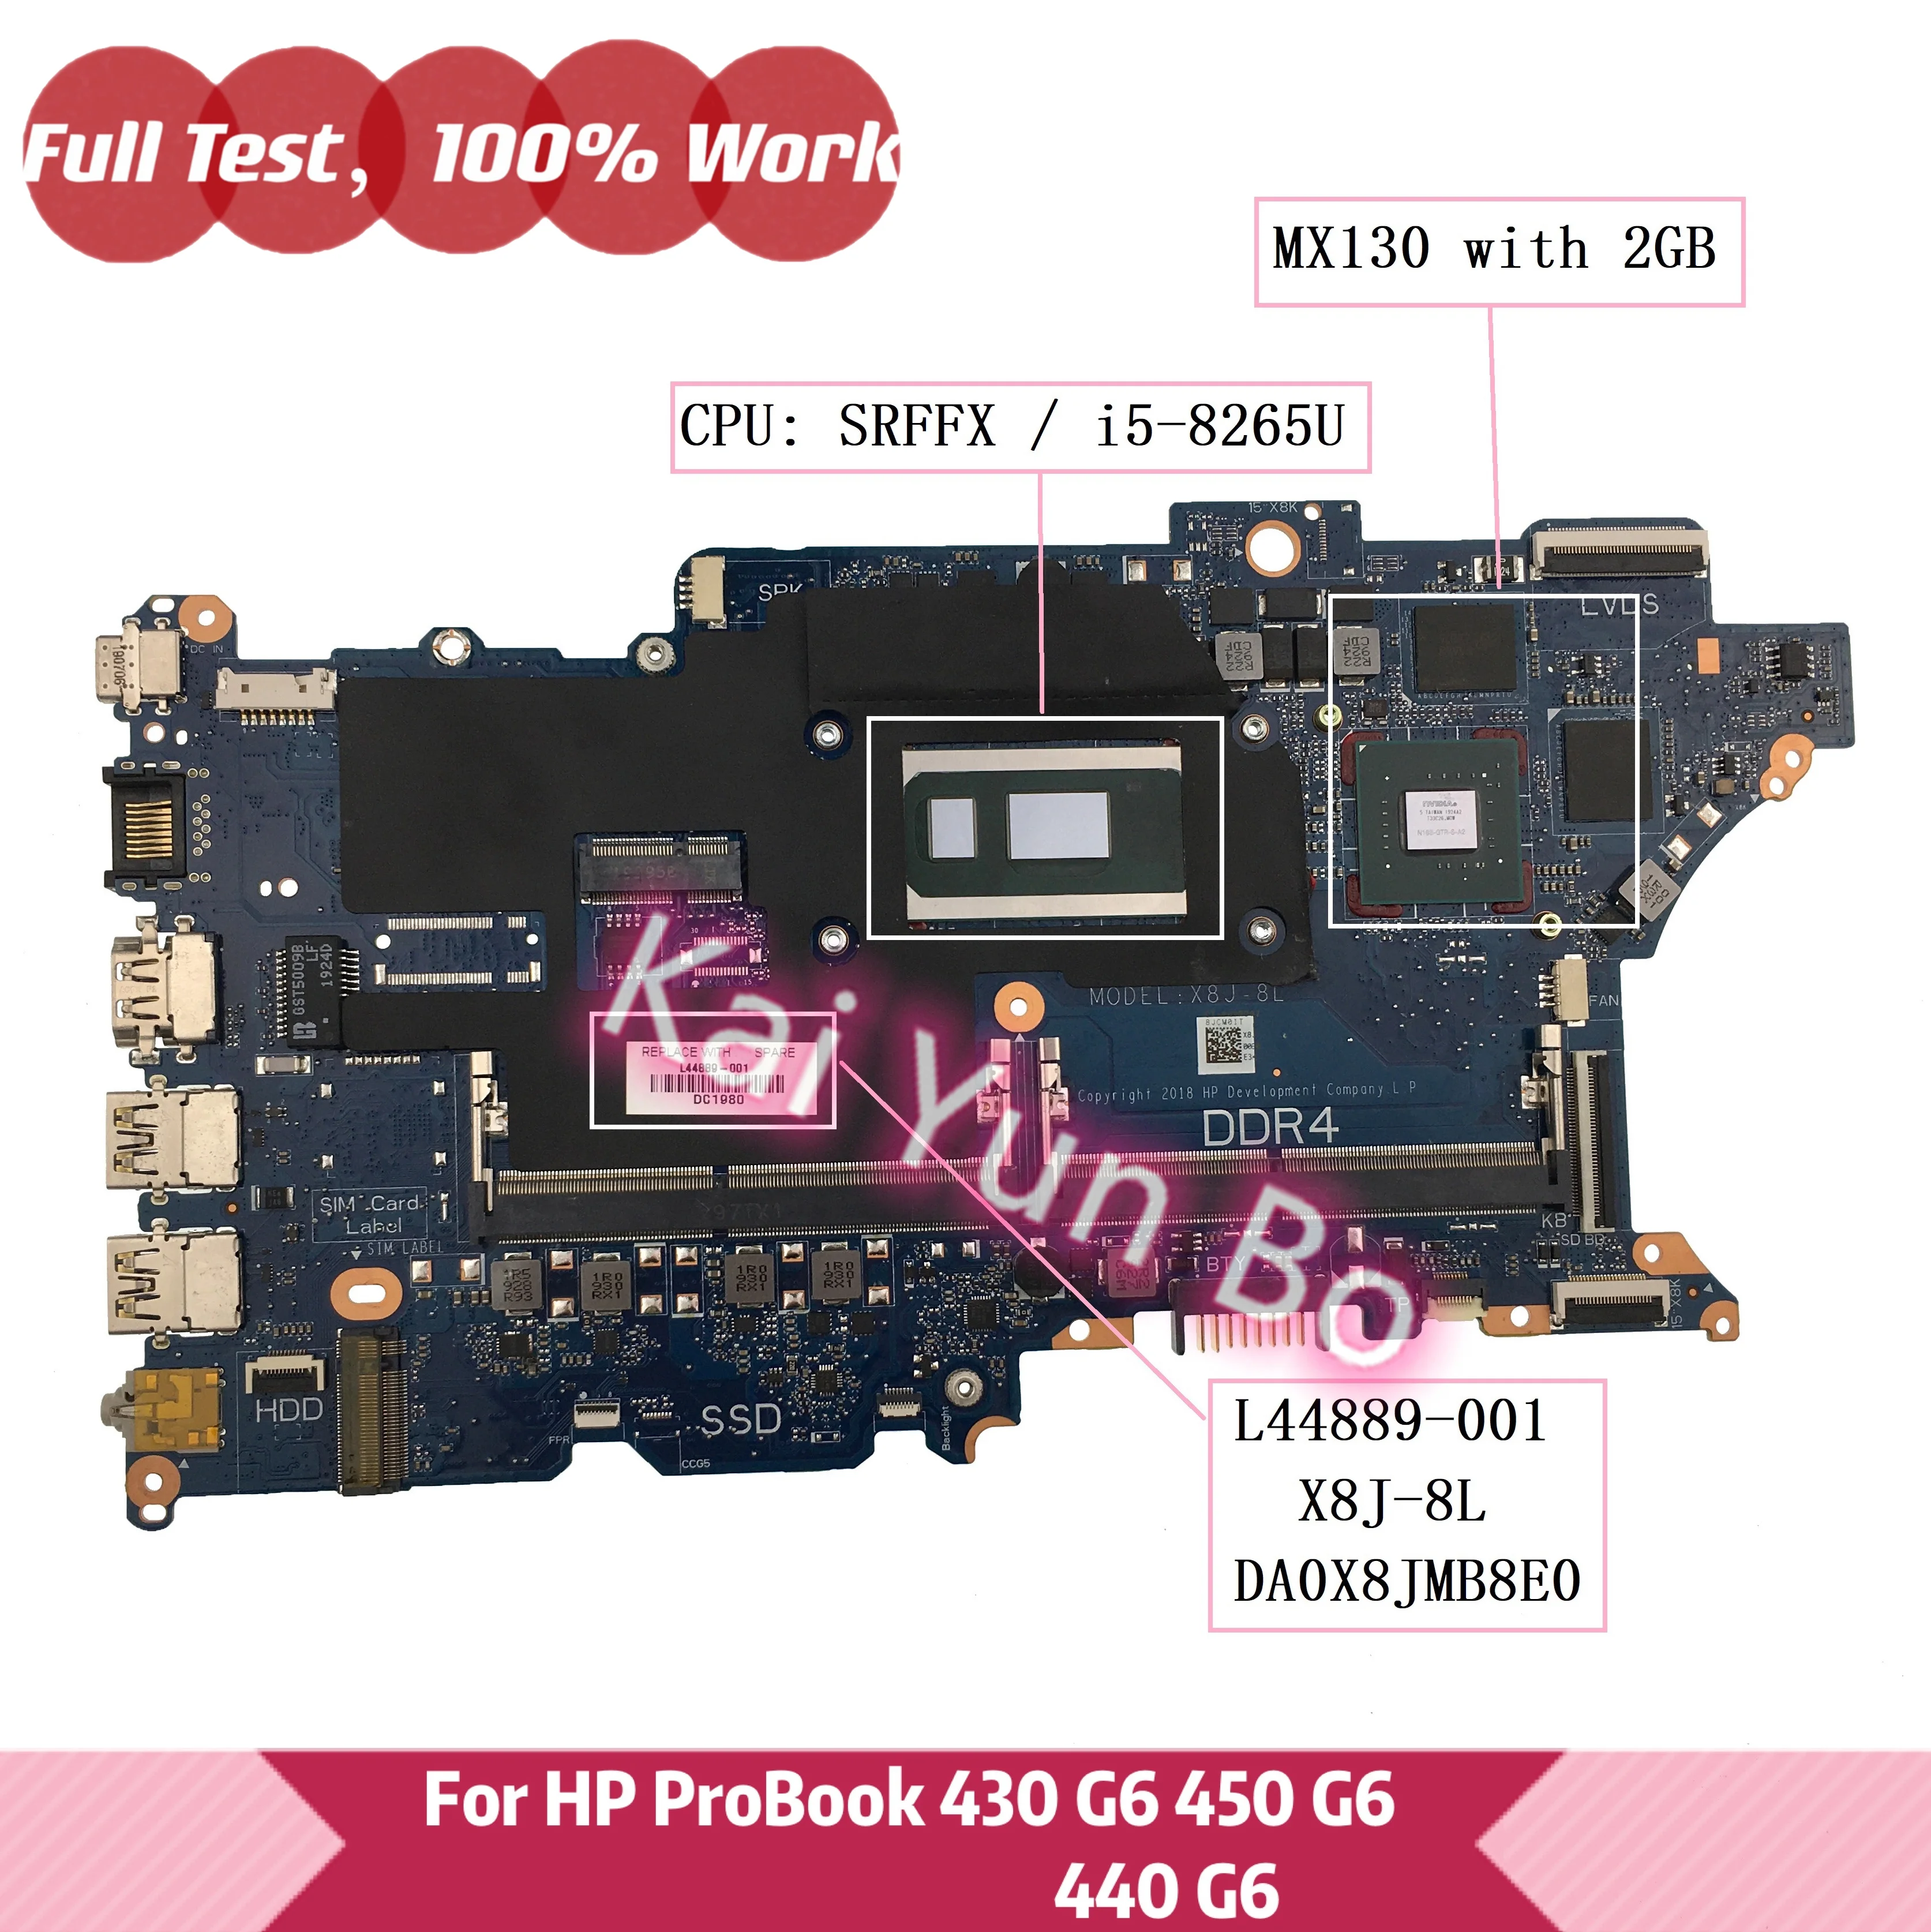 

L44889-601 For HP ProBook 430 G6 440 G6 450 G6 Laptop Motherboard DA0X8JMB8E0 X8J-8L L44889-001 With i5-8265U CPU MX130 2GB GPU